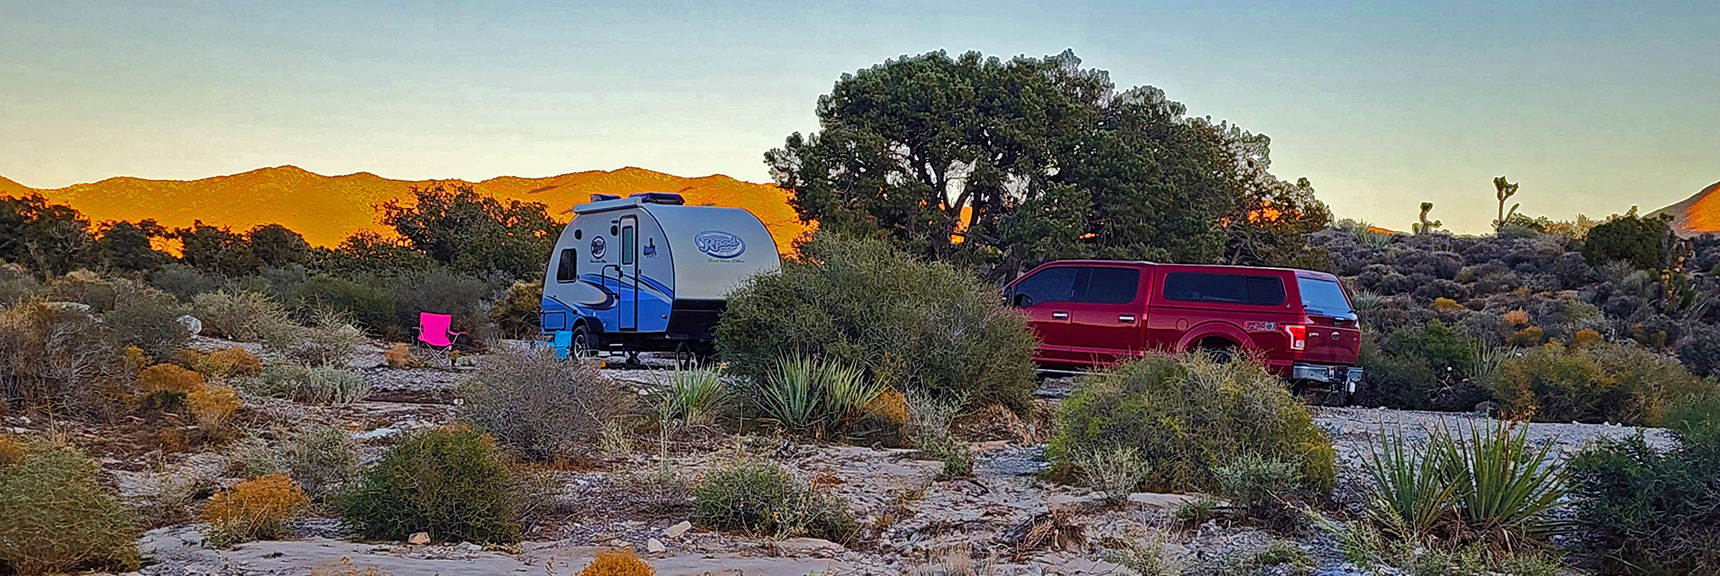 Camping Spot with Sunrise & Sunset Views on Rainbow Spring Road | Lovell Canyon Camping, Nevada | David Smith | LasVegasAreaTrails.com